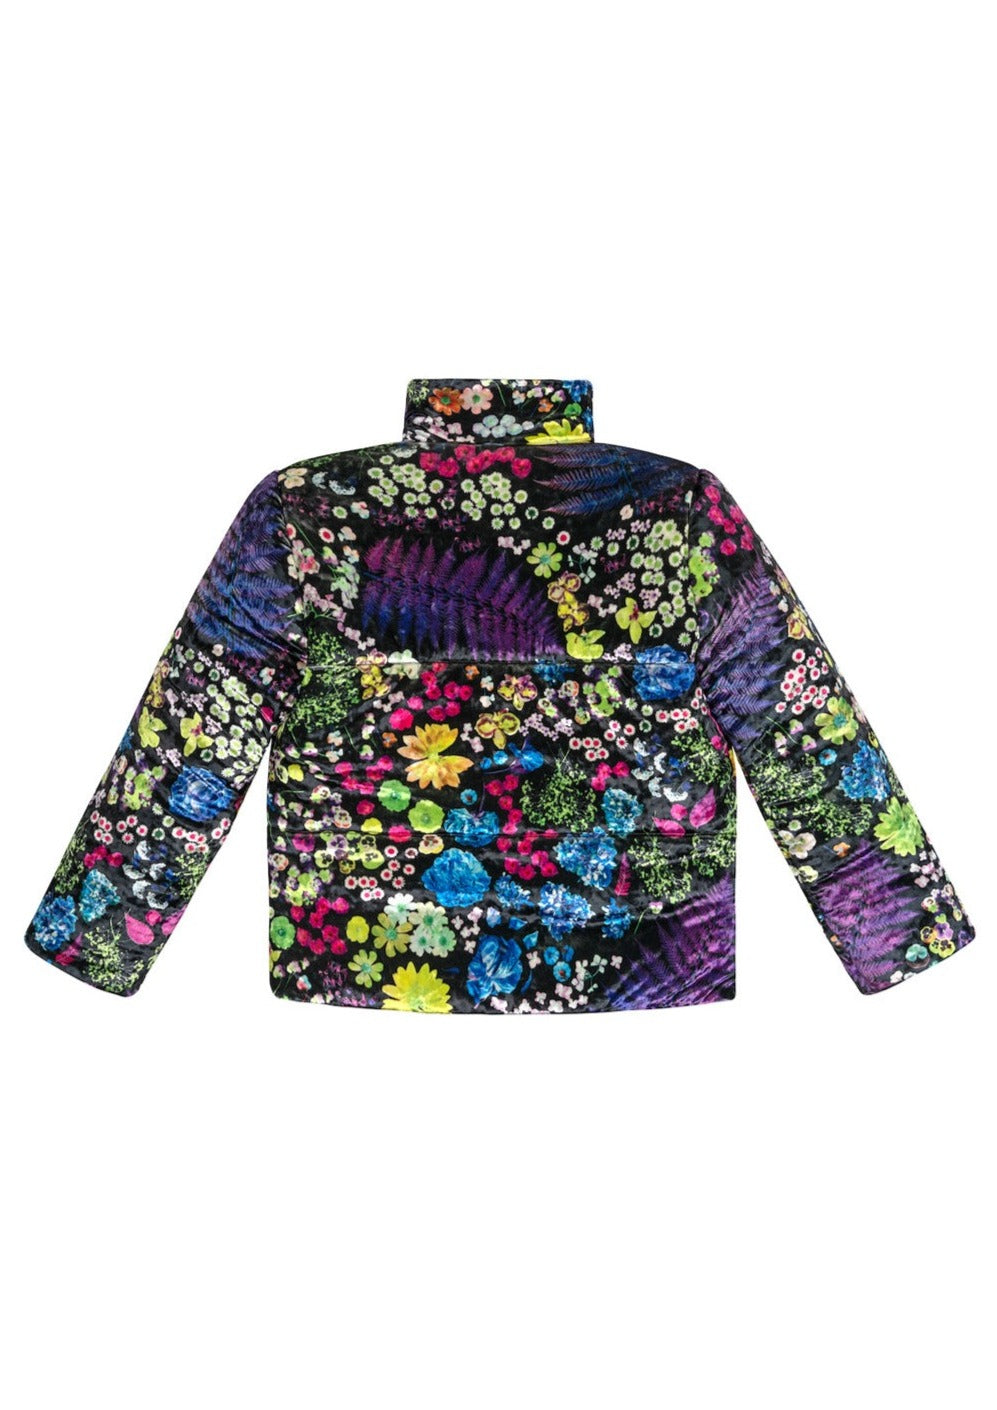 Velvet puffer jacket in multicolored Acid Potpourri print with black base color.